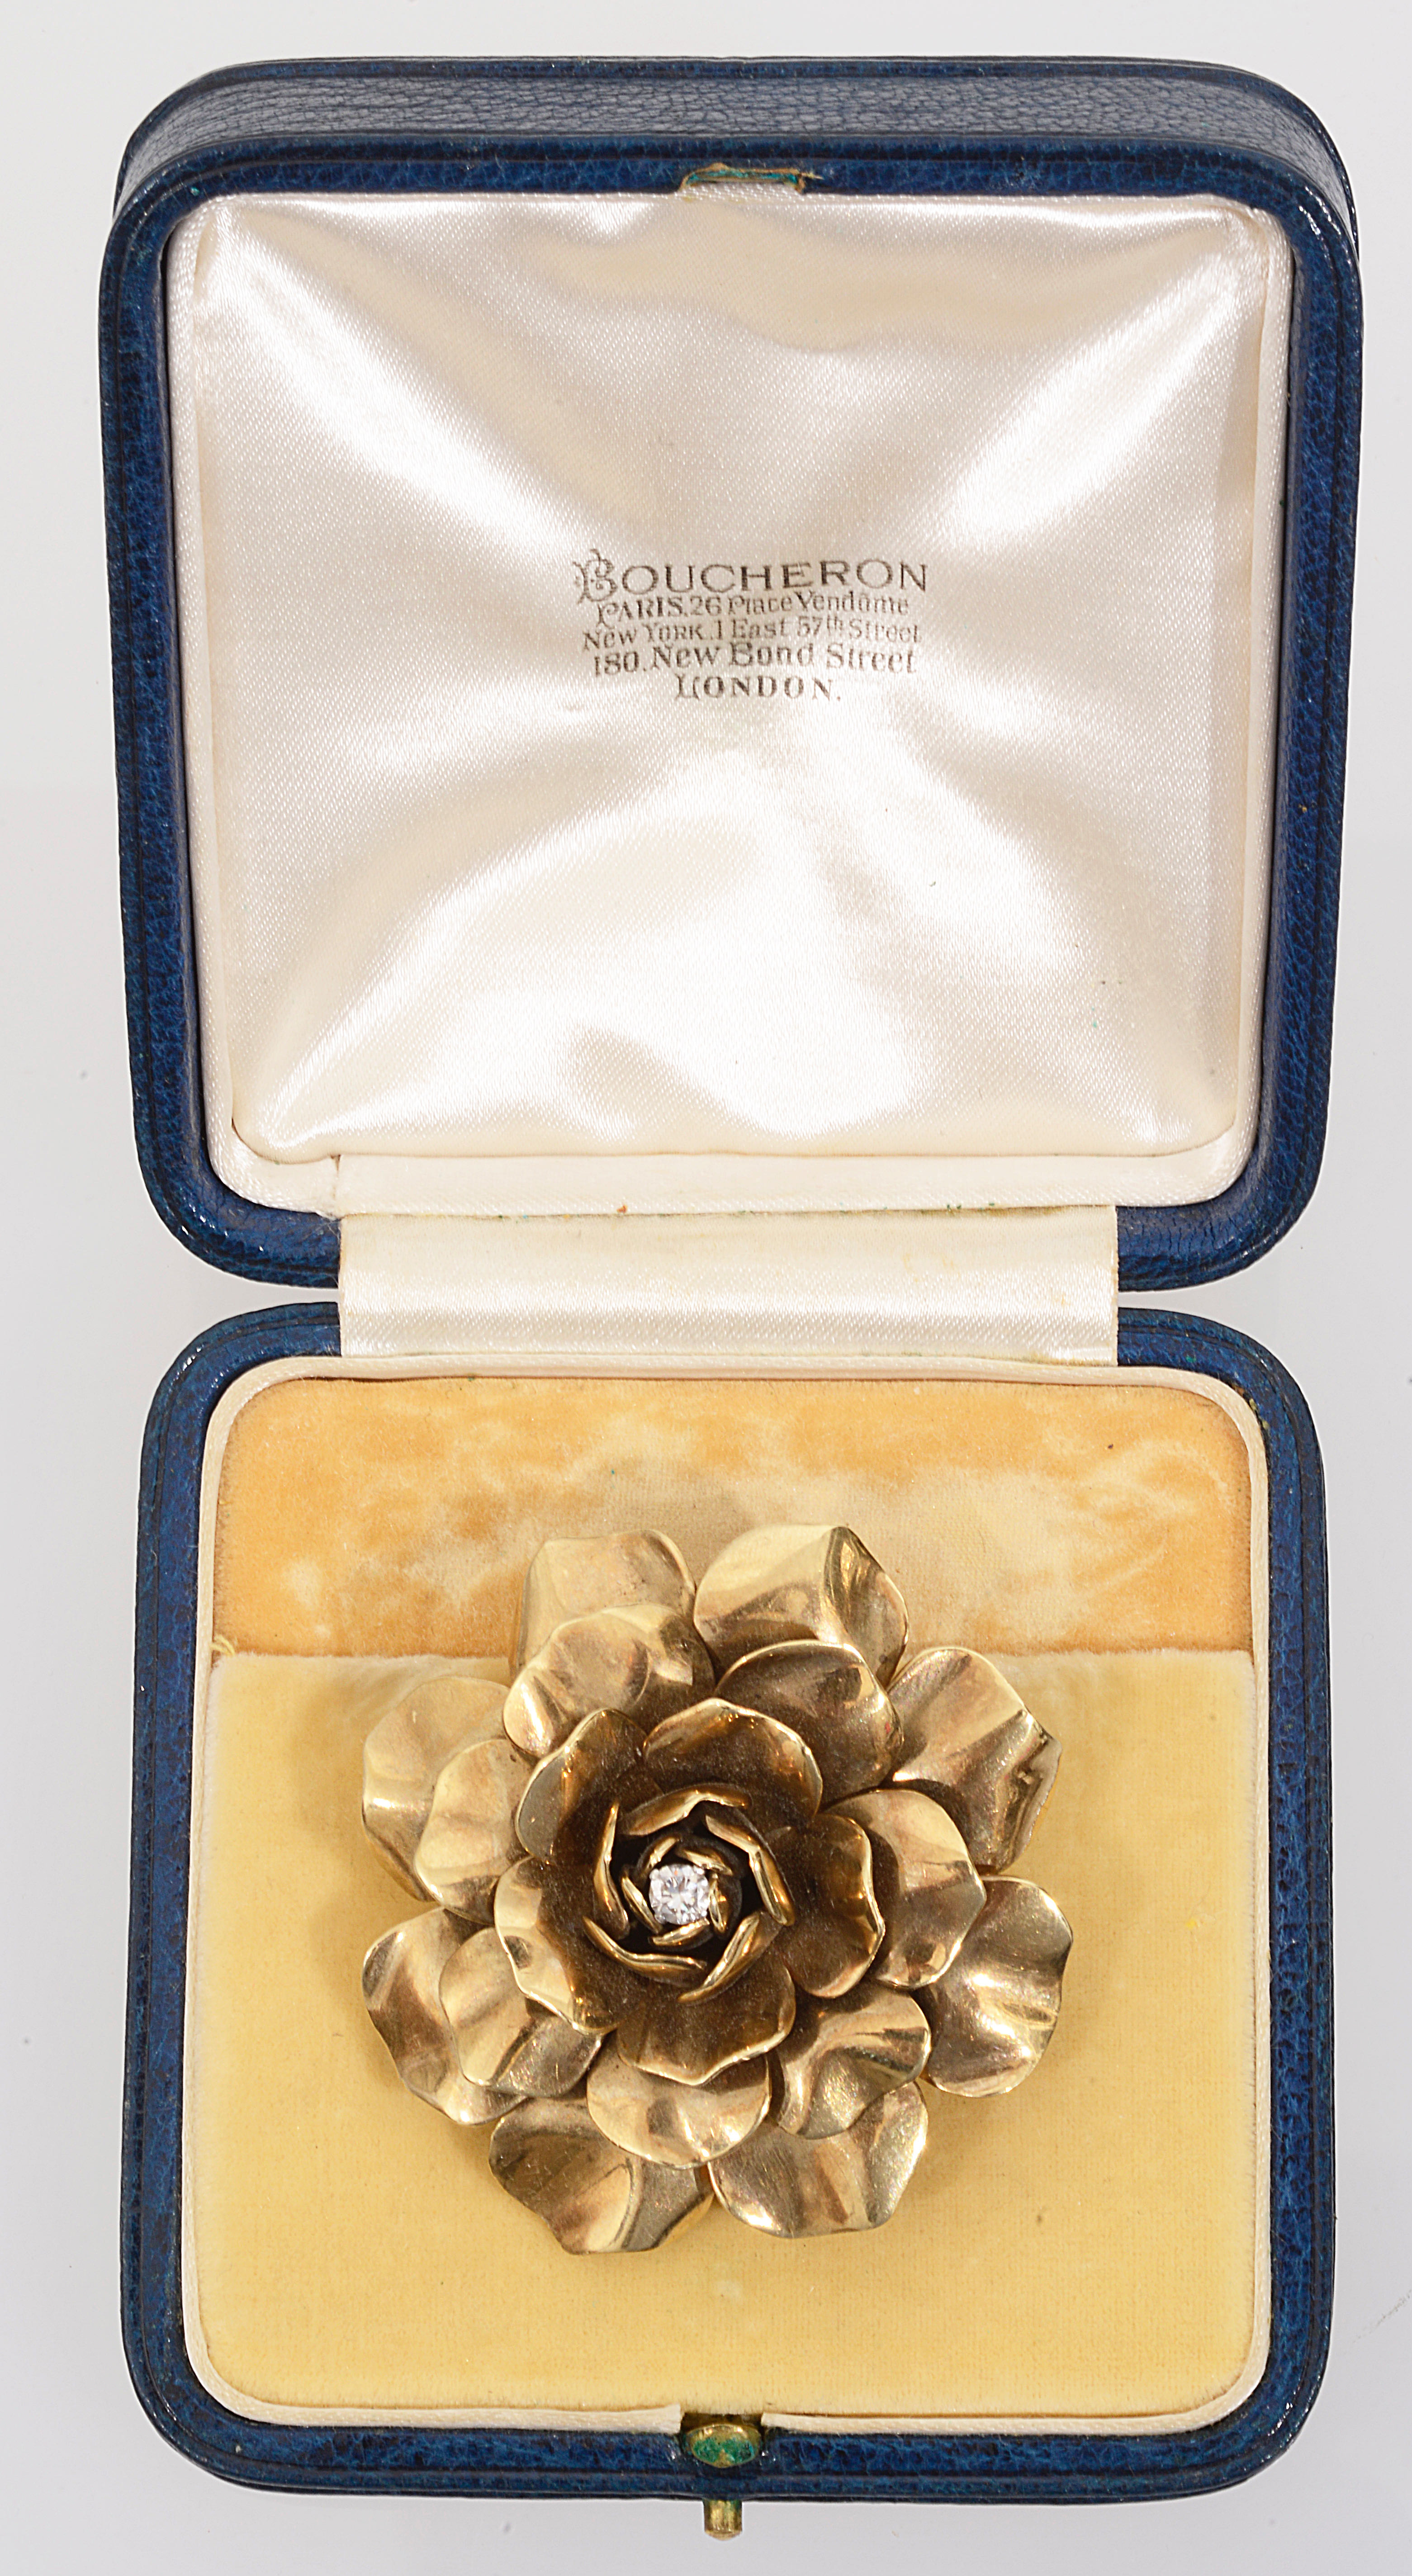 A large diamond-set floral clip brooch by Boucheron, circa 1940